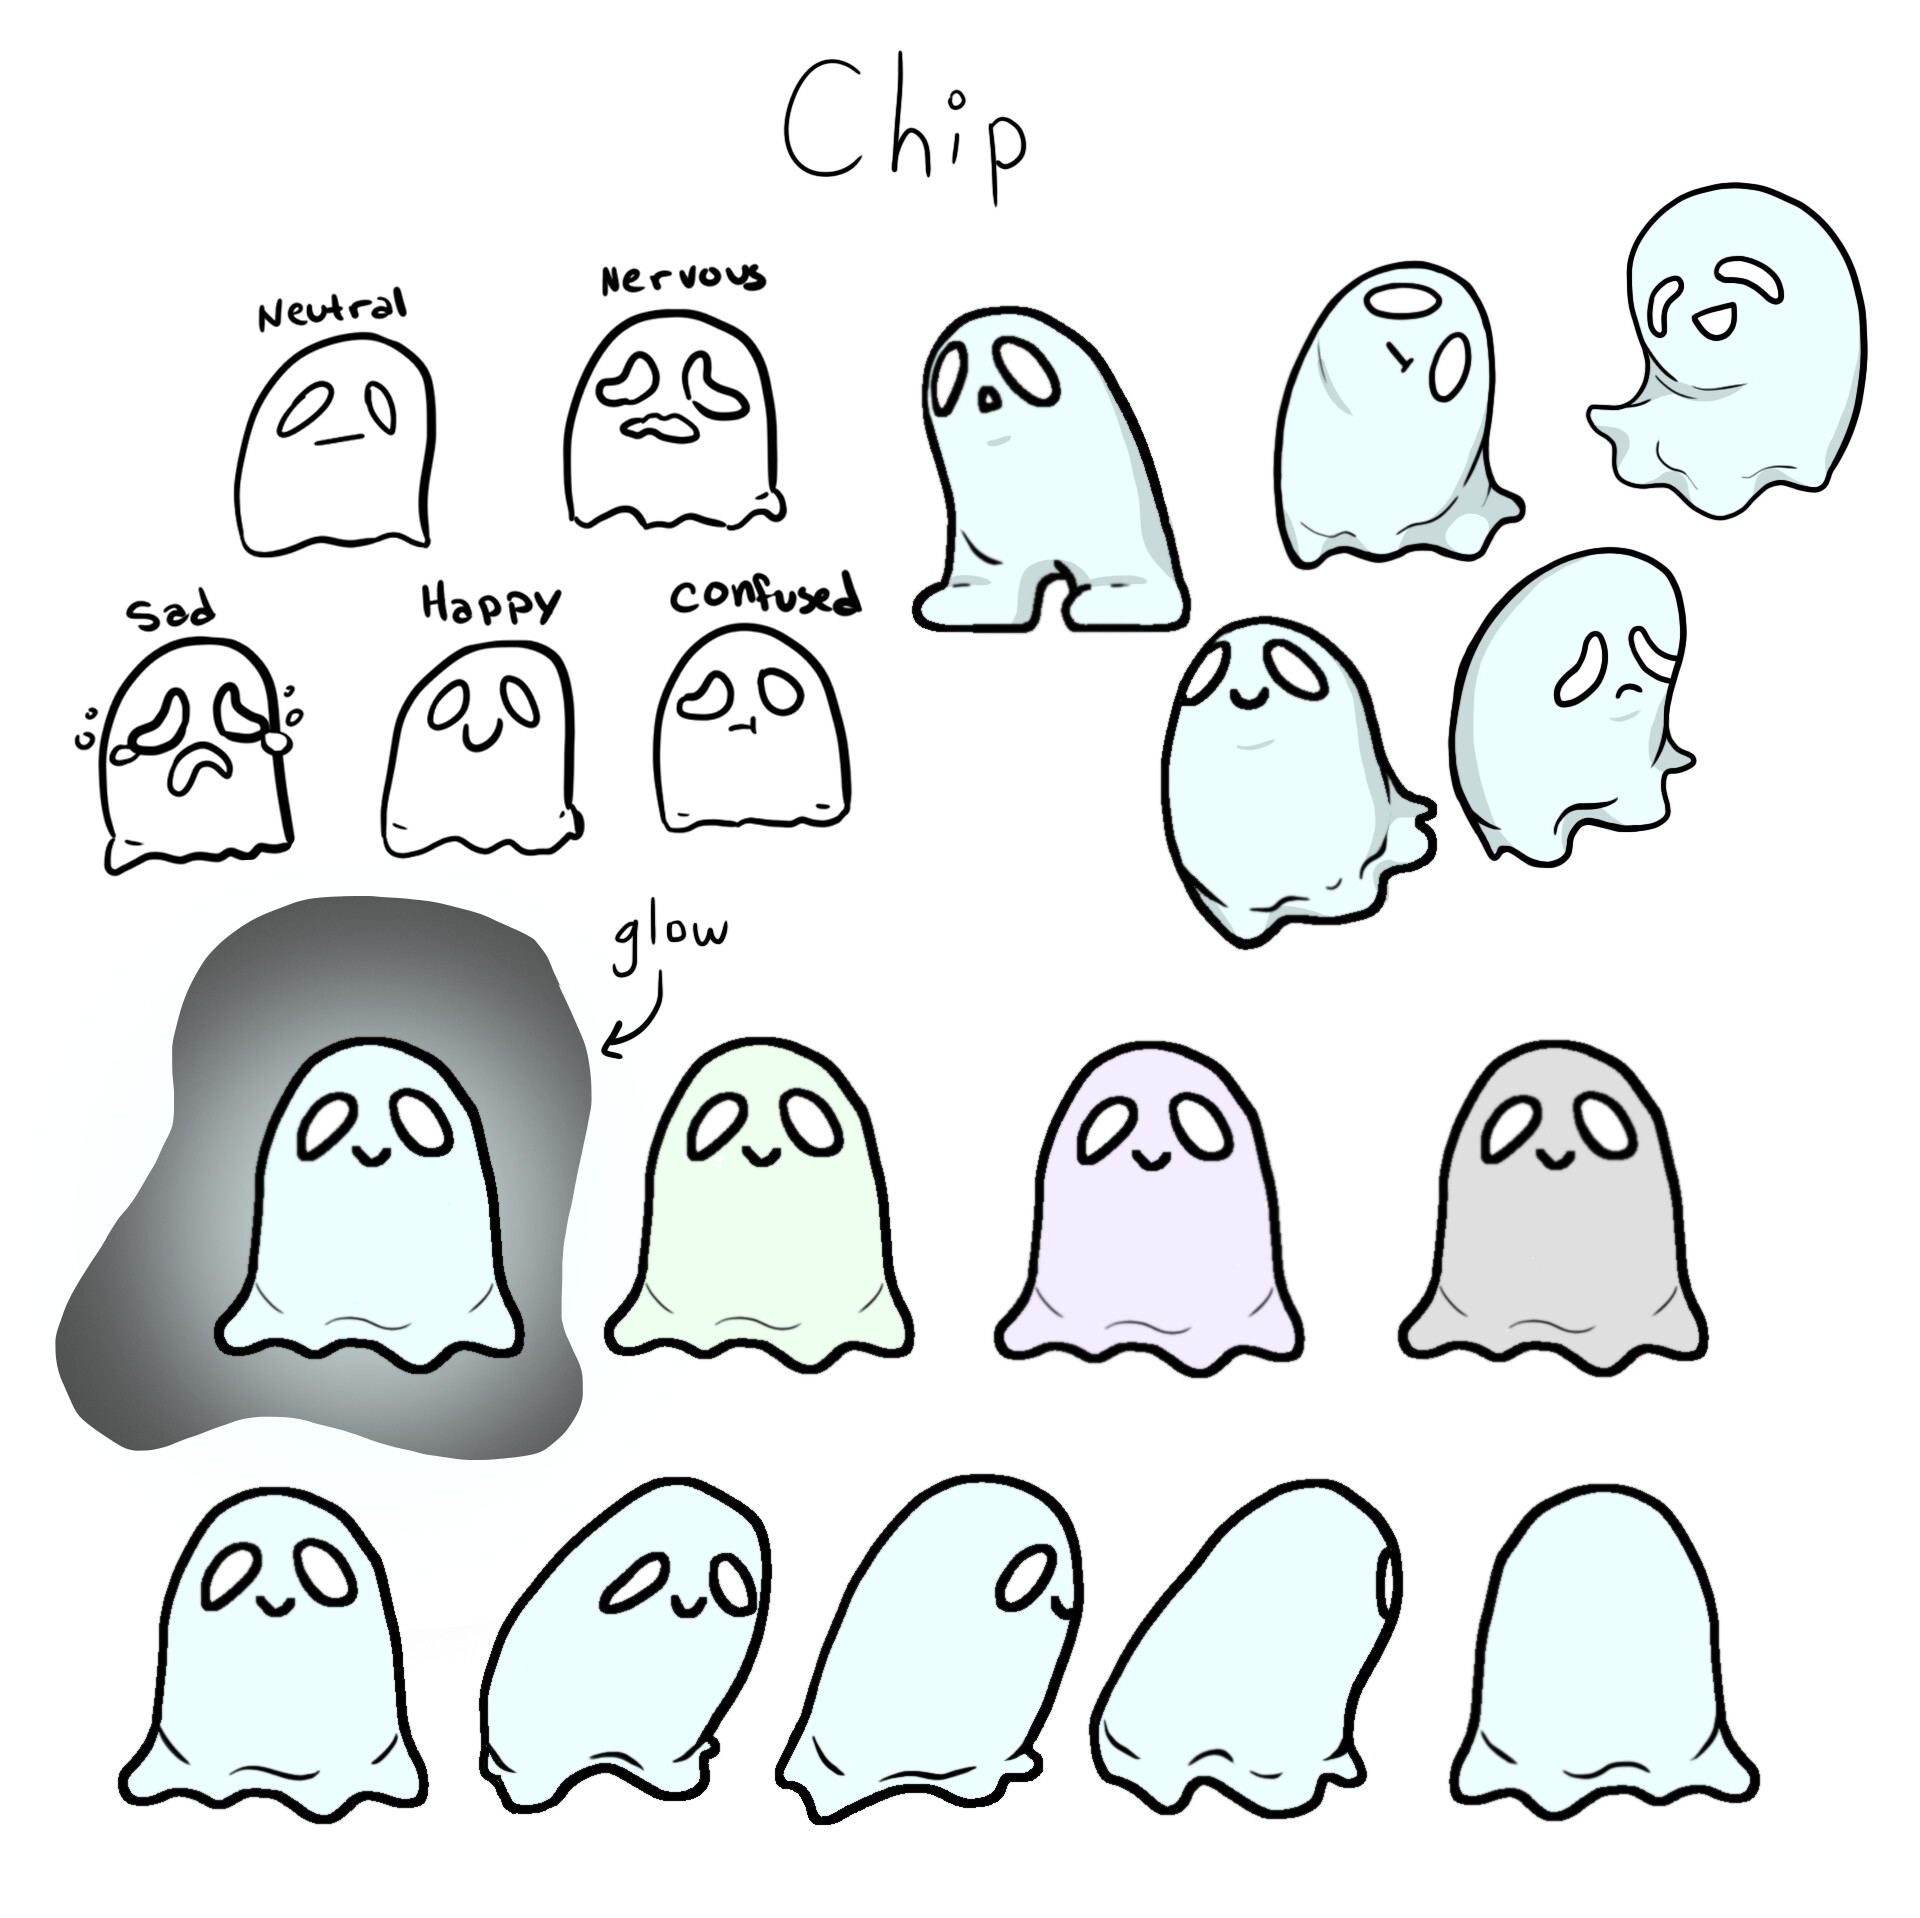 ArtStation - Chip Character Sheet